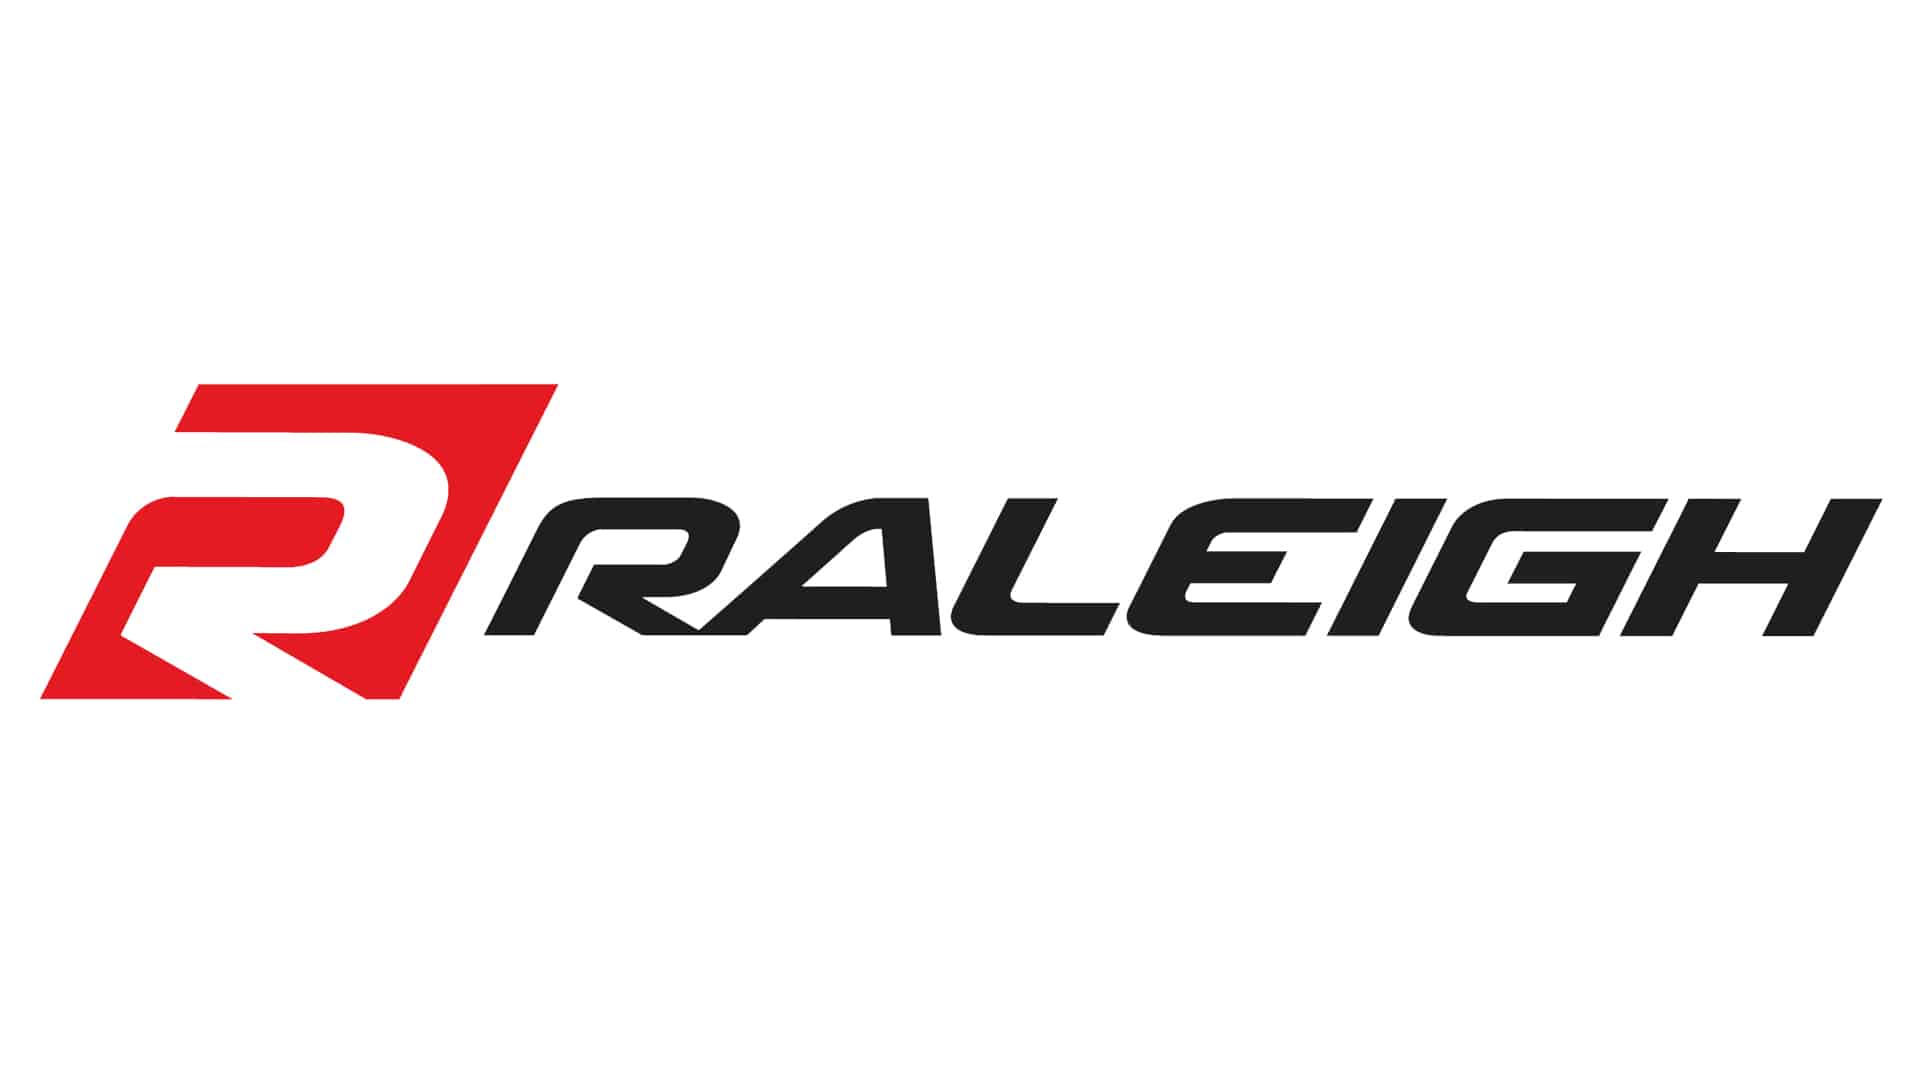 Raleigh bikes logo